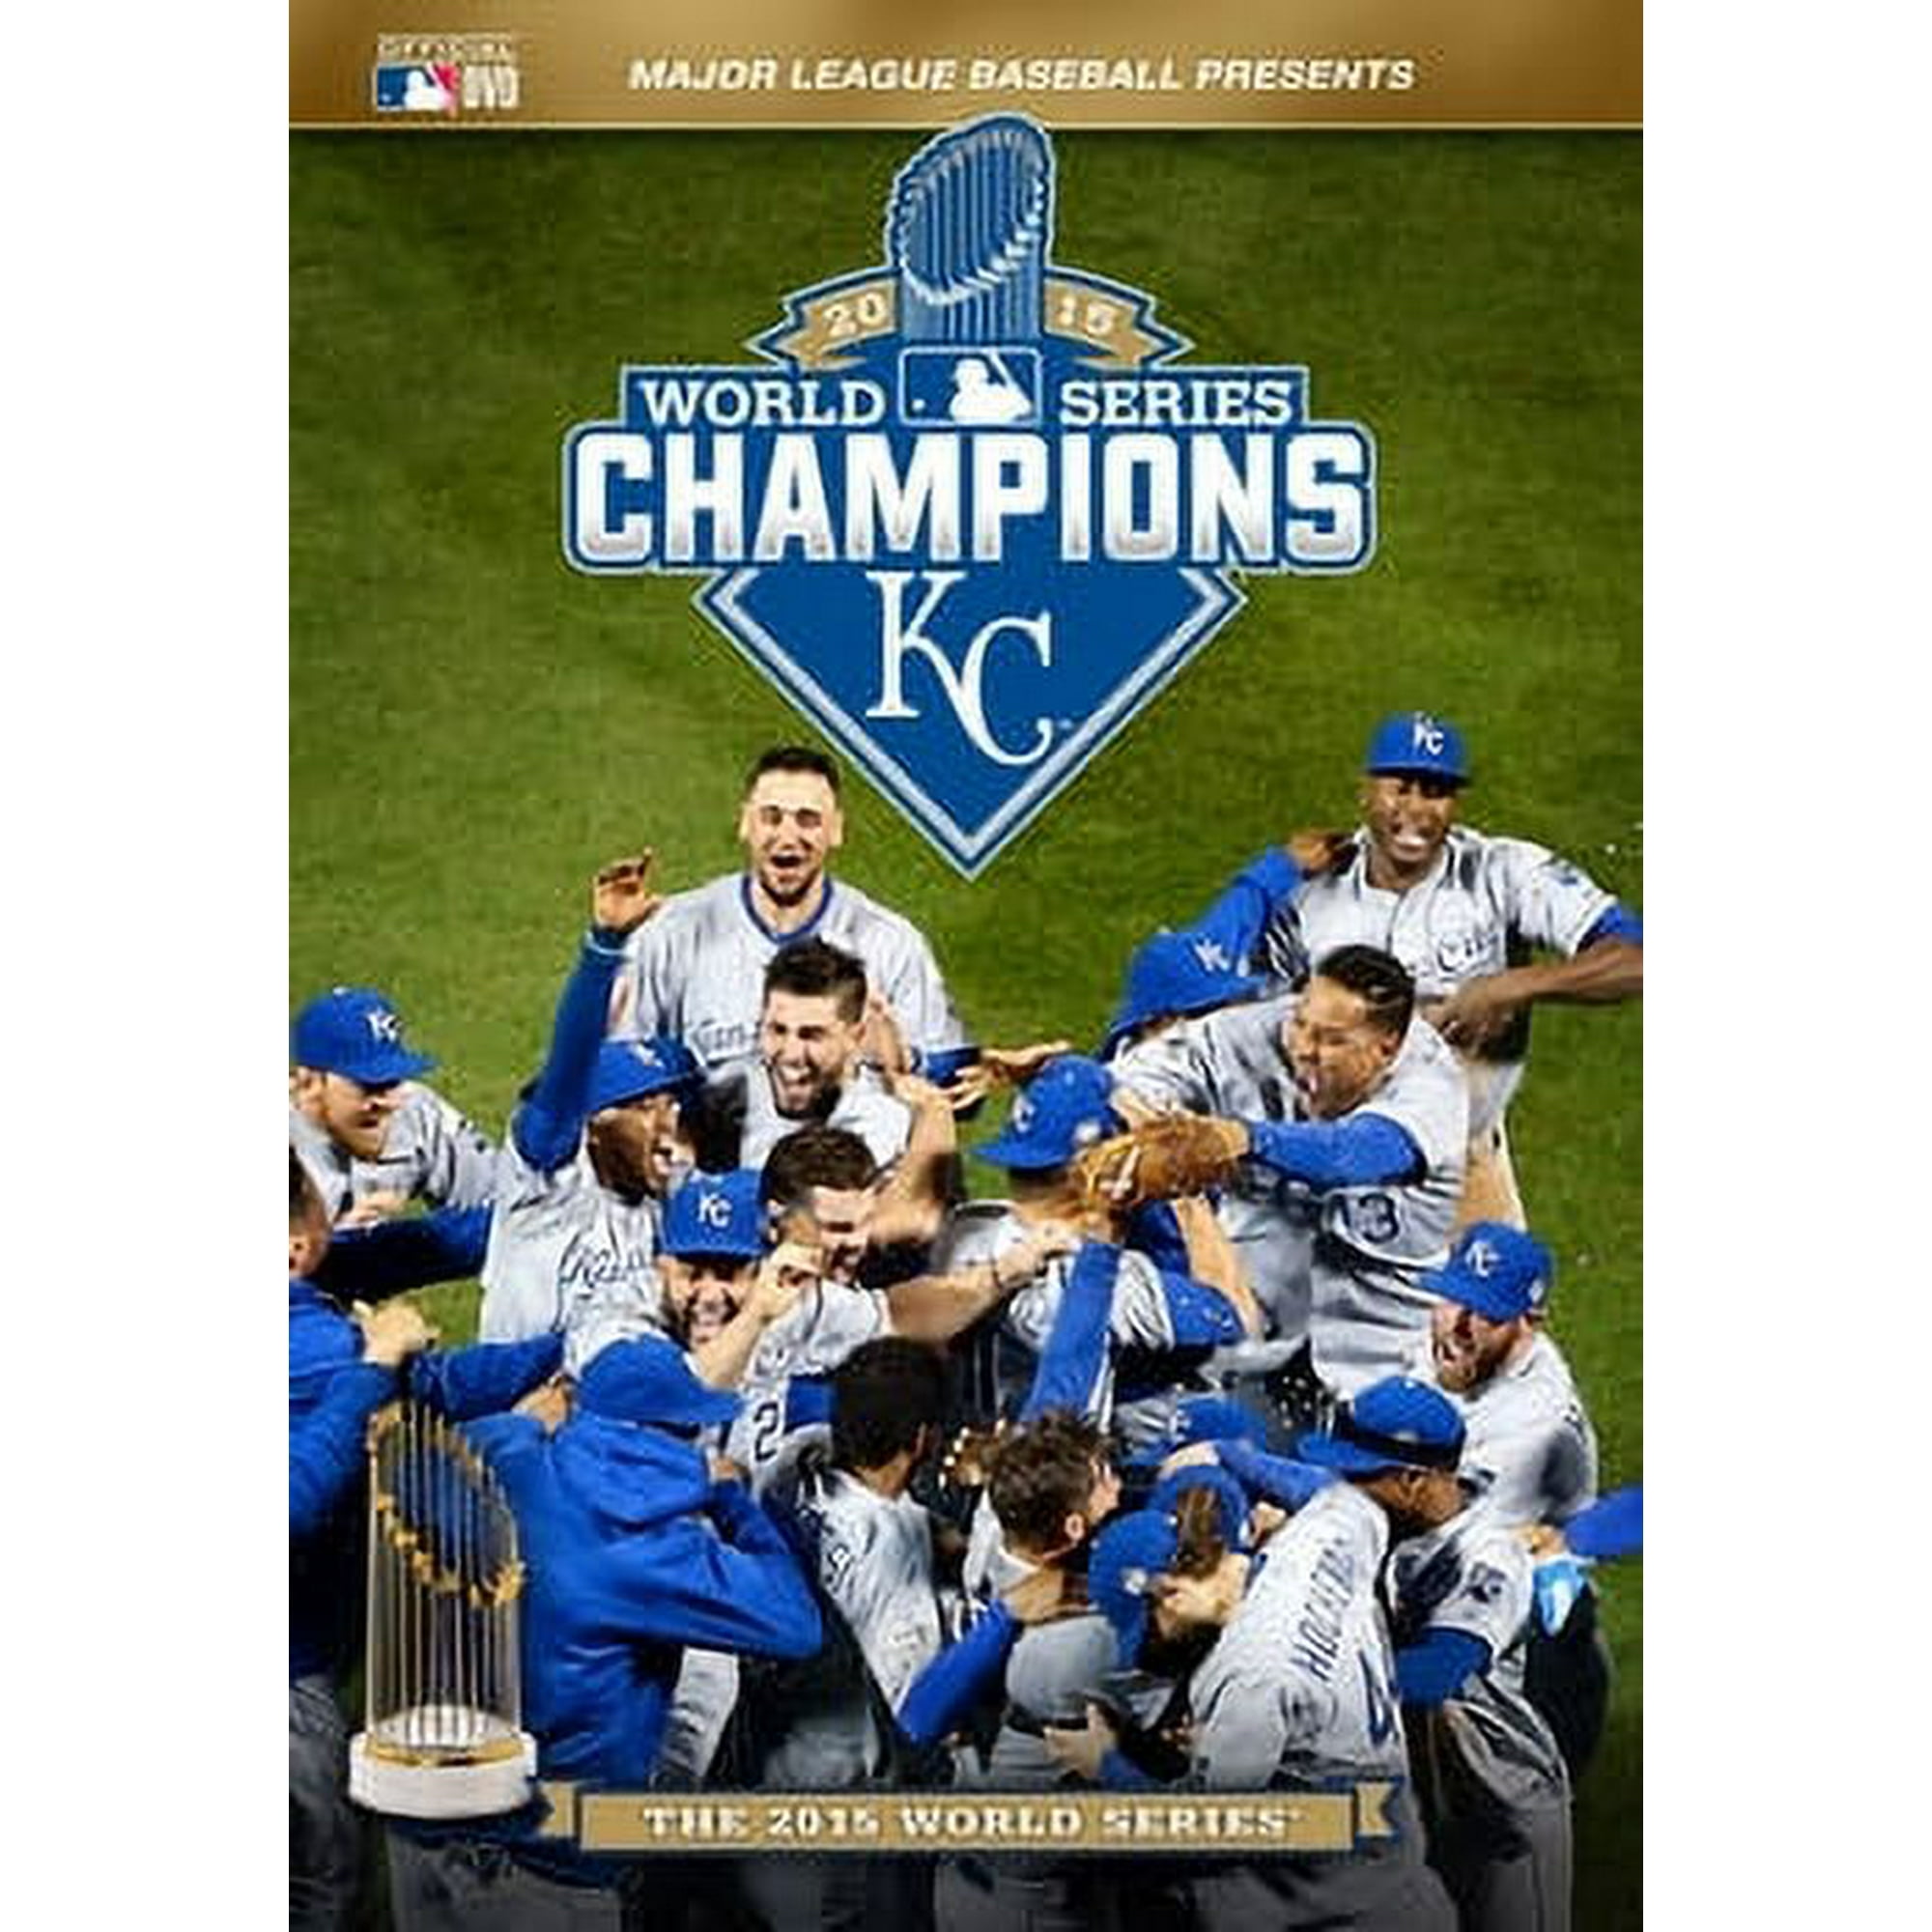 2015 World Series Champions - Kansas City Royals